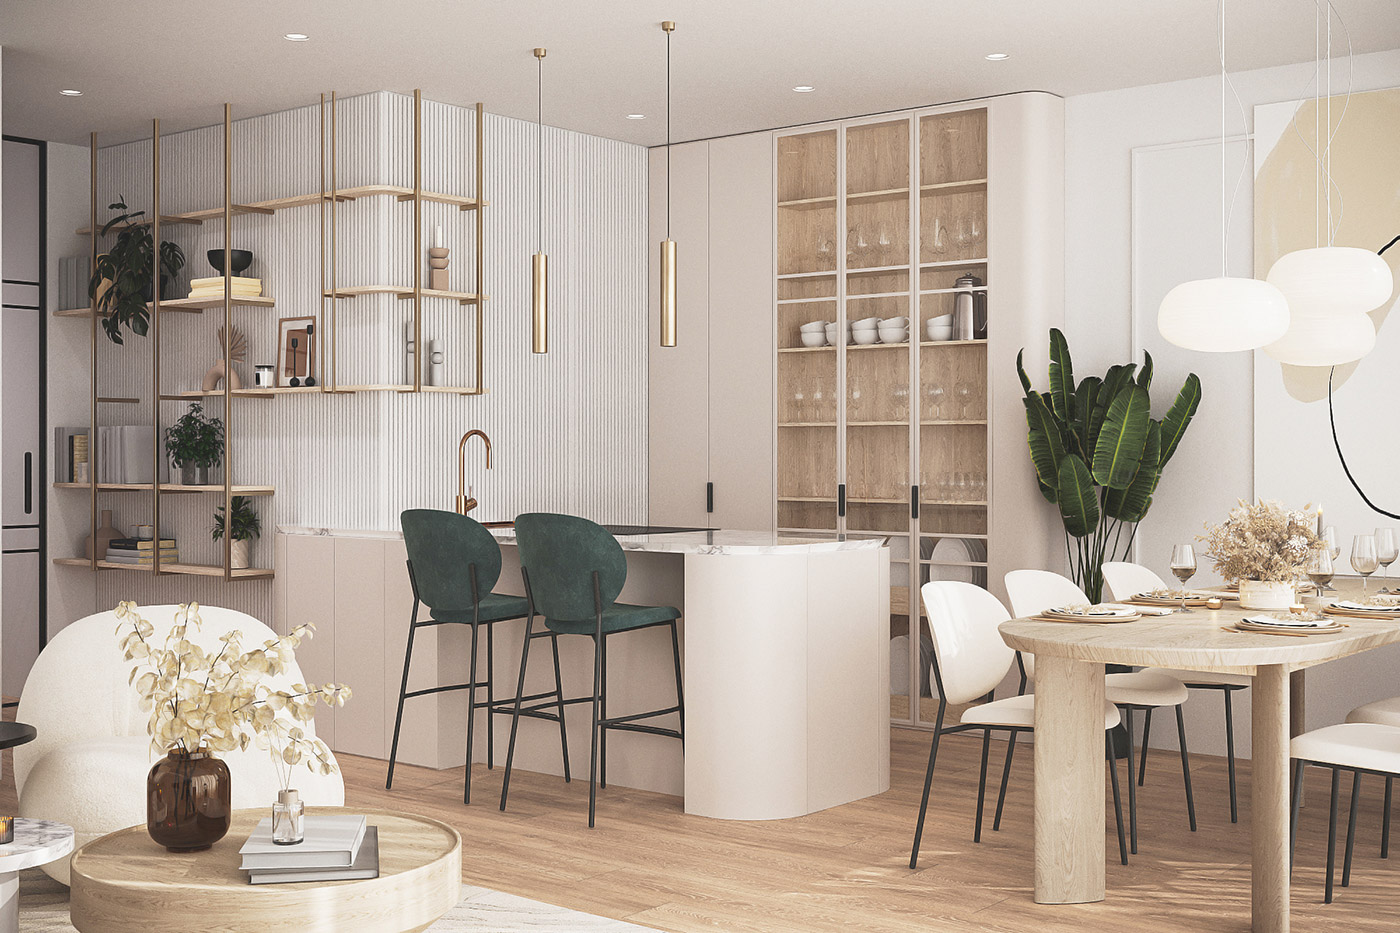 Prostornina | Destino, Apartment interior design | 3D visualisations: Maria Sidorova